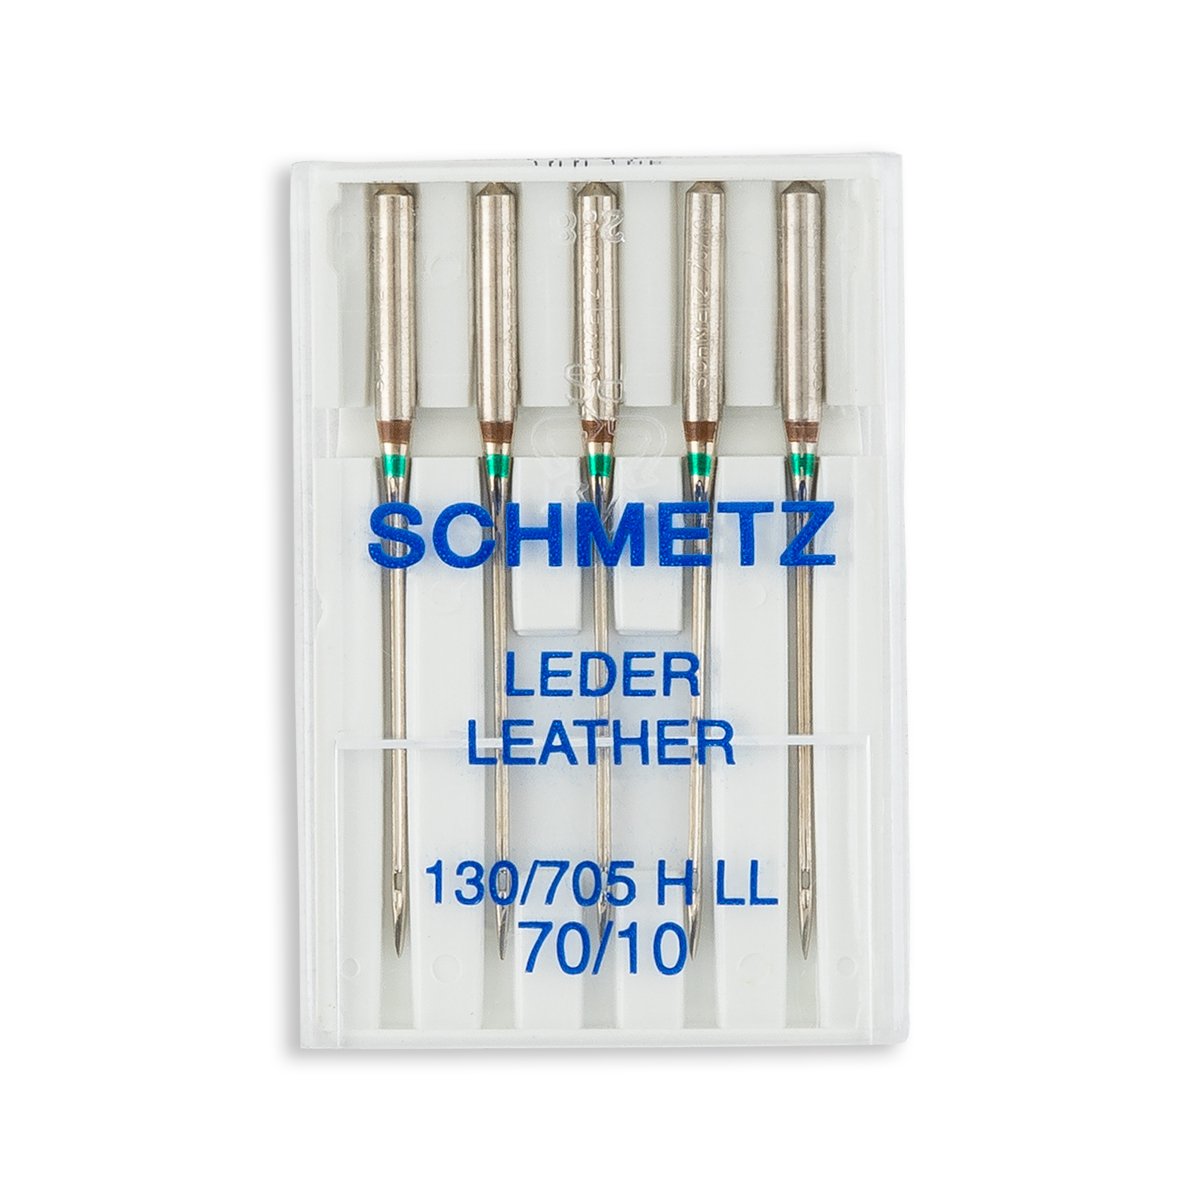 Schmetz Leather Machine Needles 5 Pkg Size 18/110